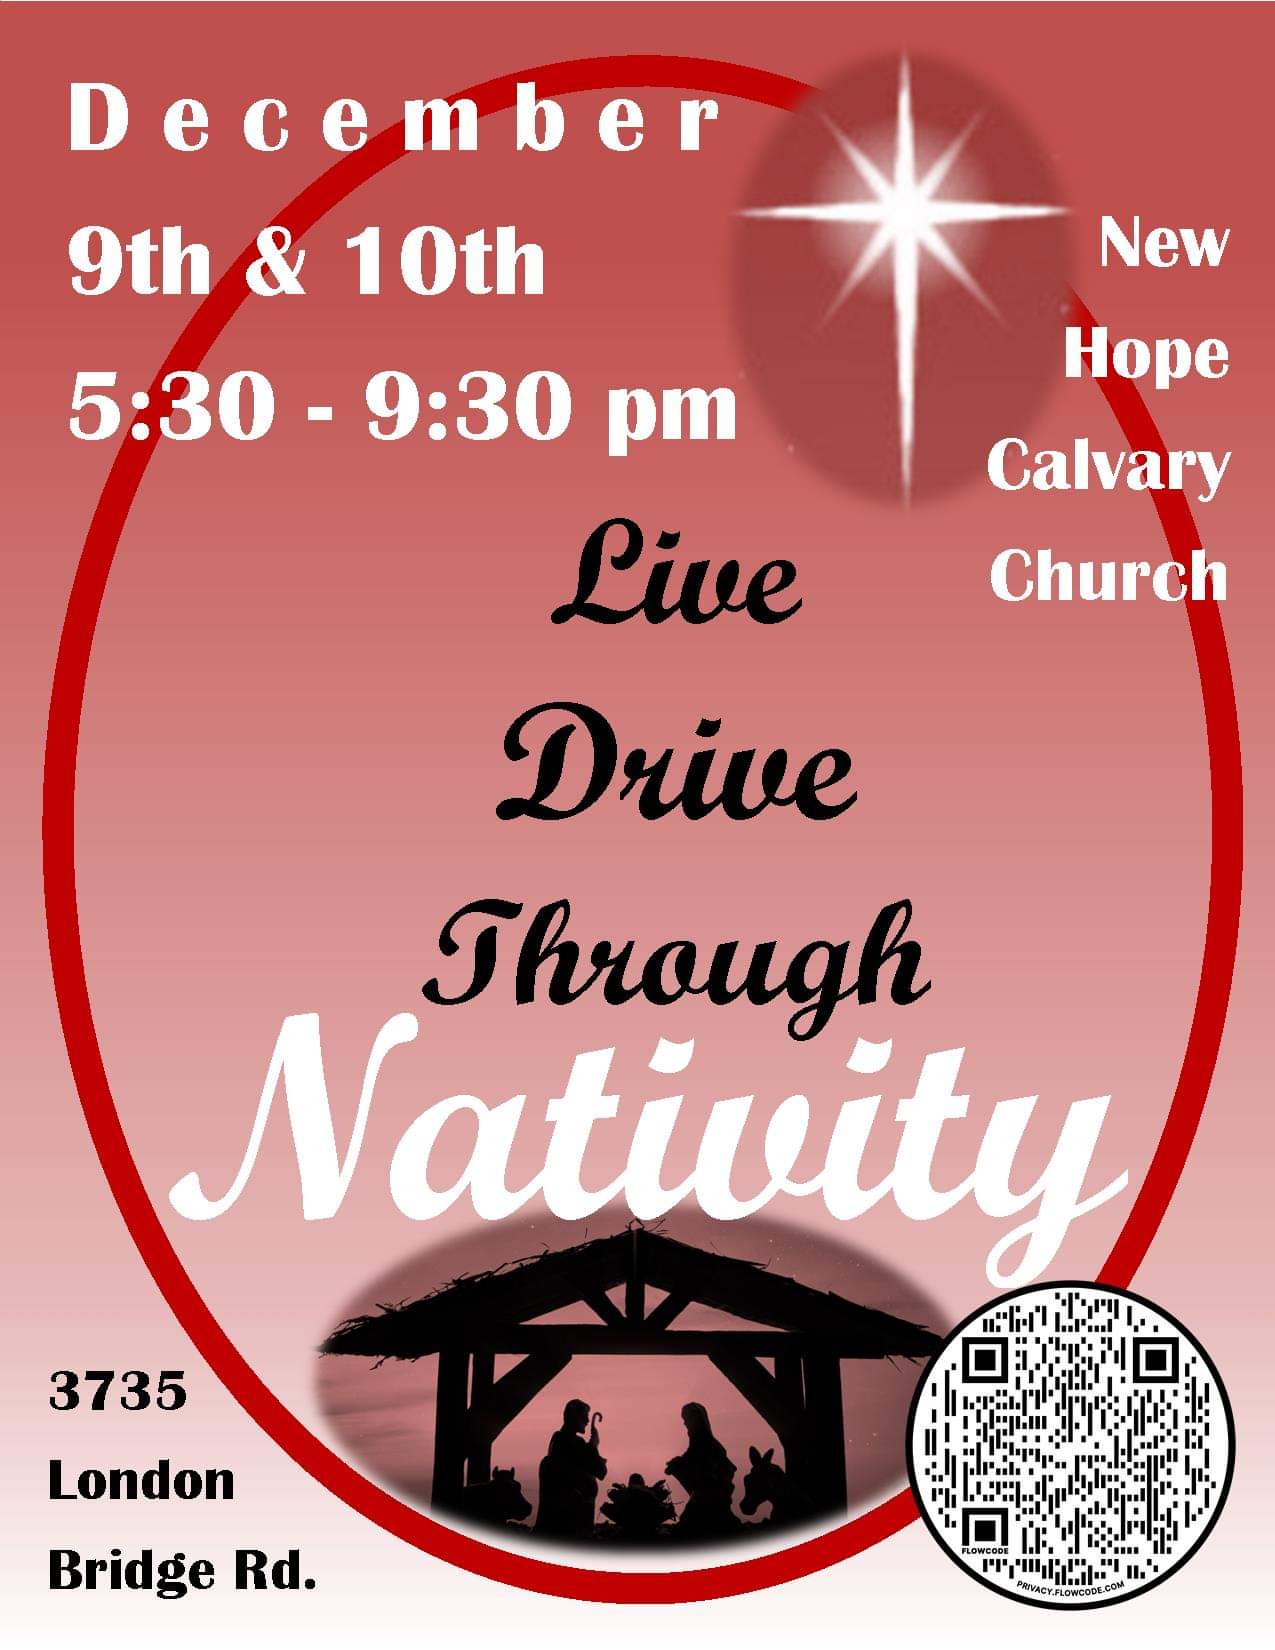 New Hope Calvary Church Live Drive -Through Nativity